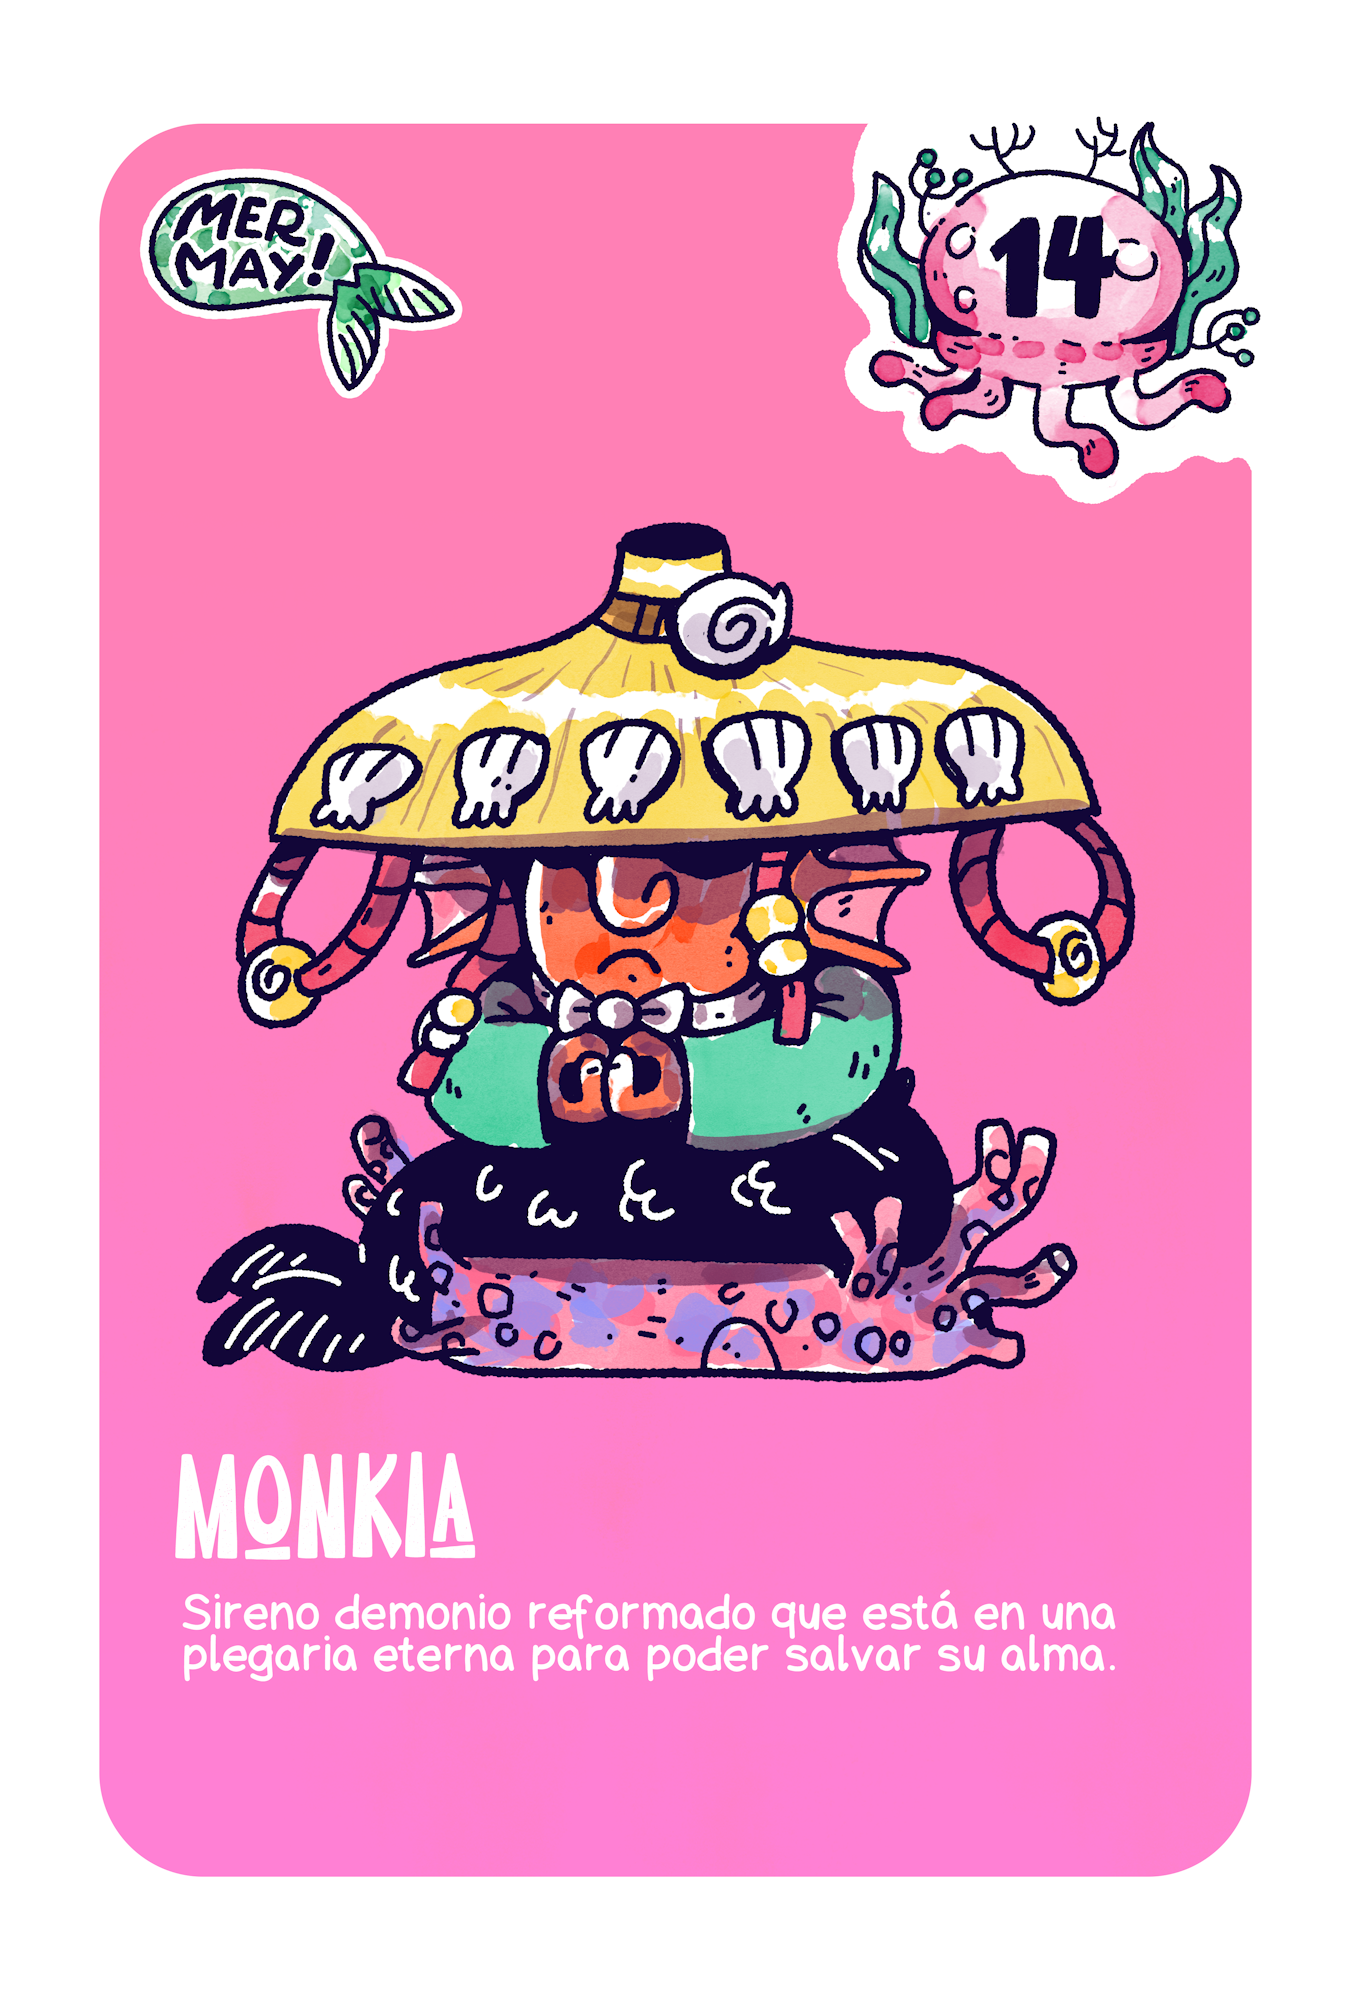 Monkia